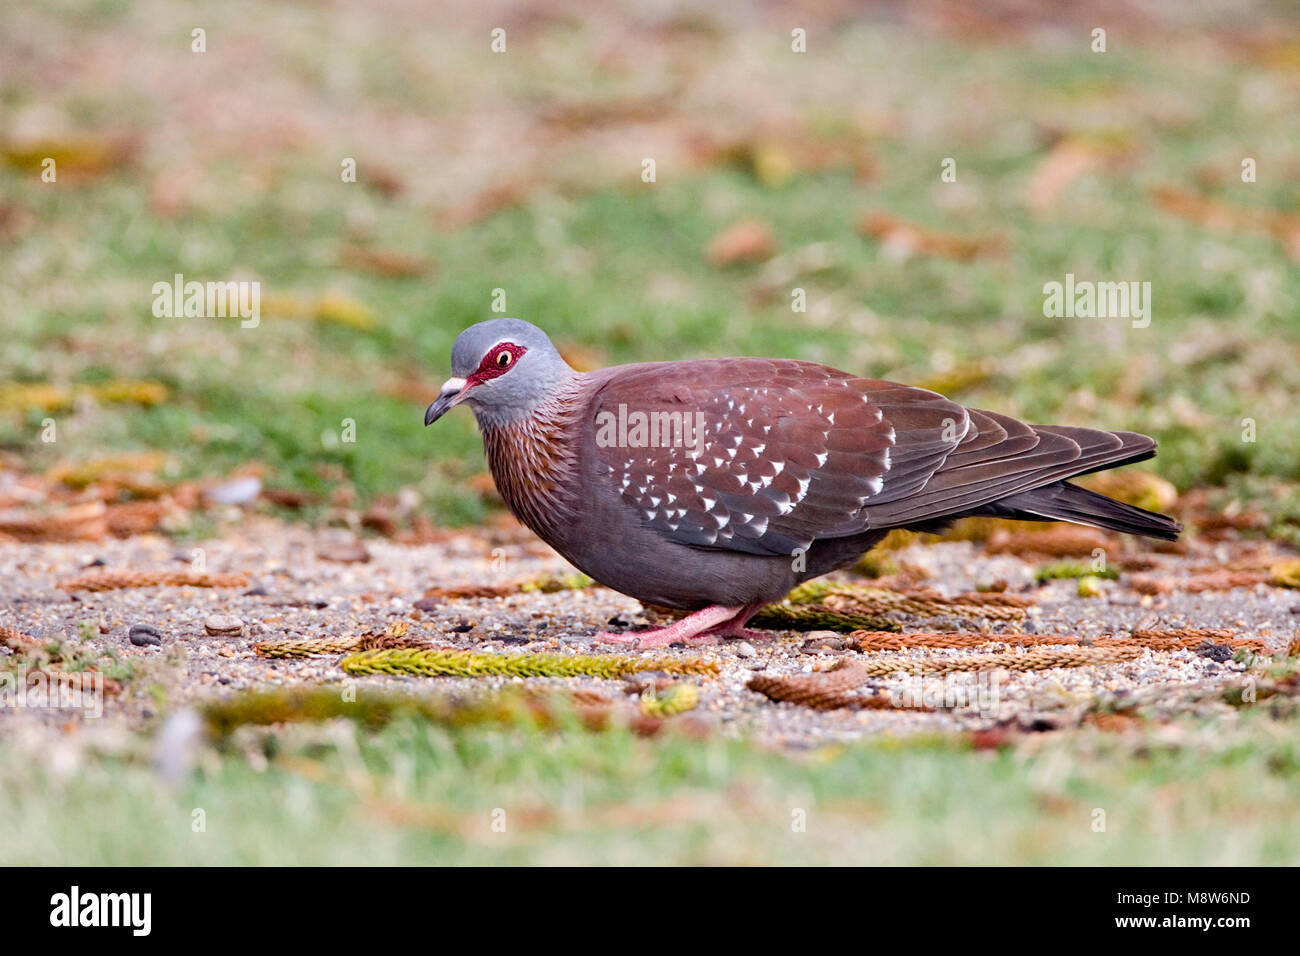 Gespikkelde Duif foeragerend op de grond; African Rock Pigeon foraging on the ground Stock Photo